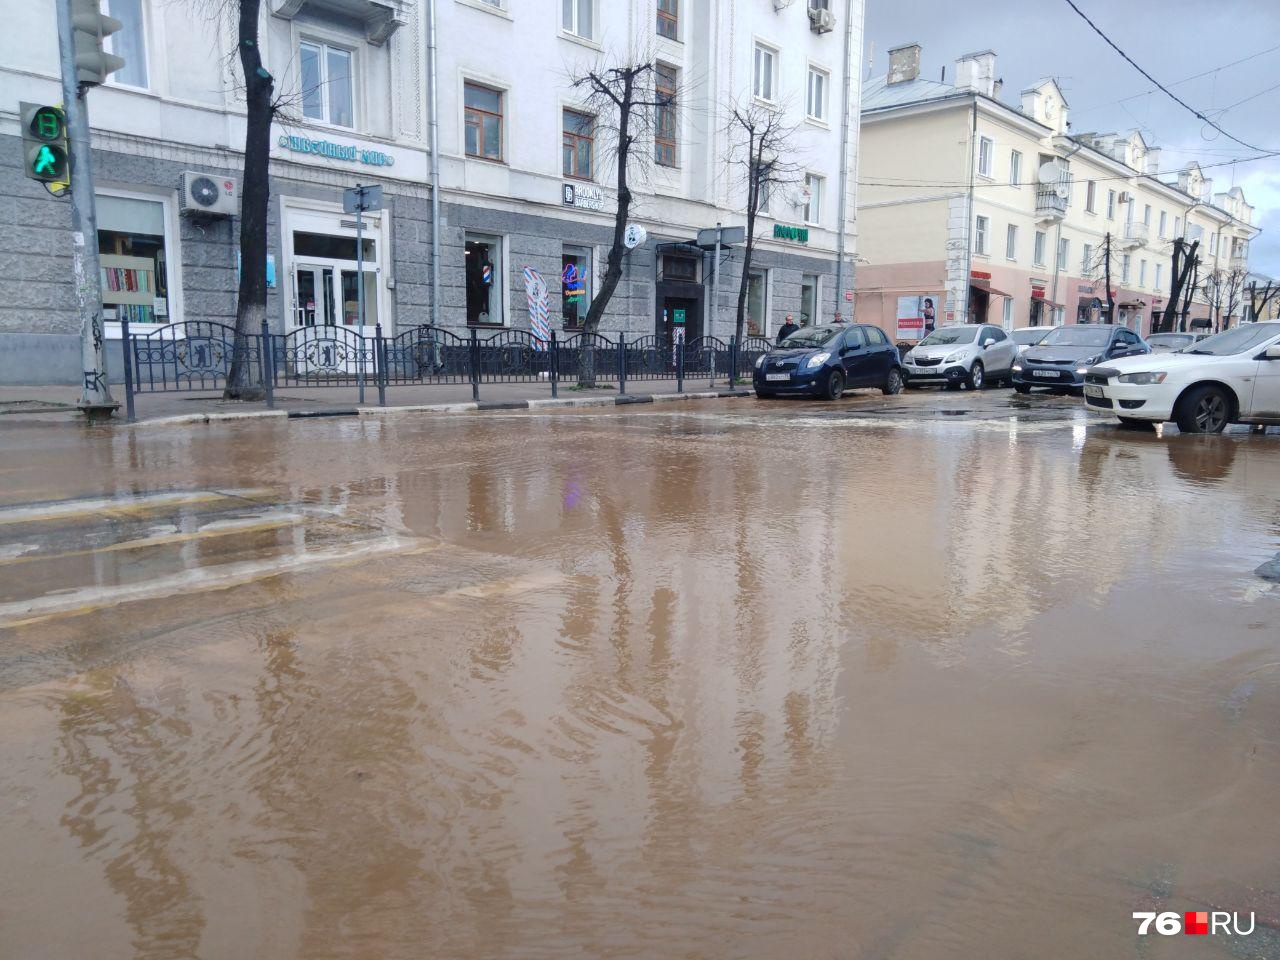 Улица Депутатская пару часов назад была залита водой